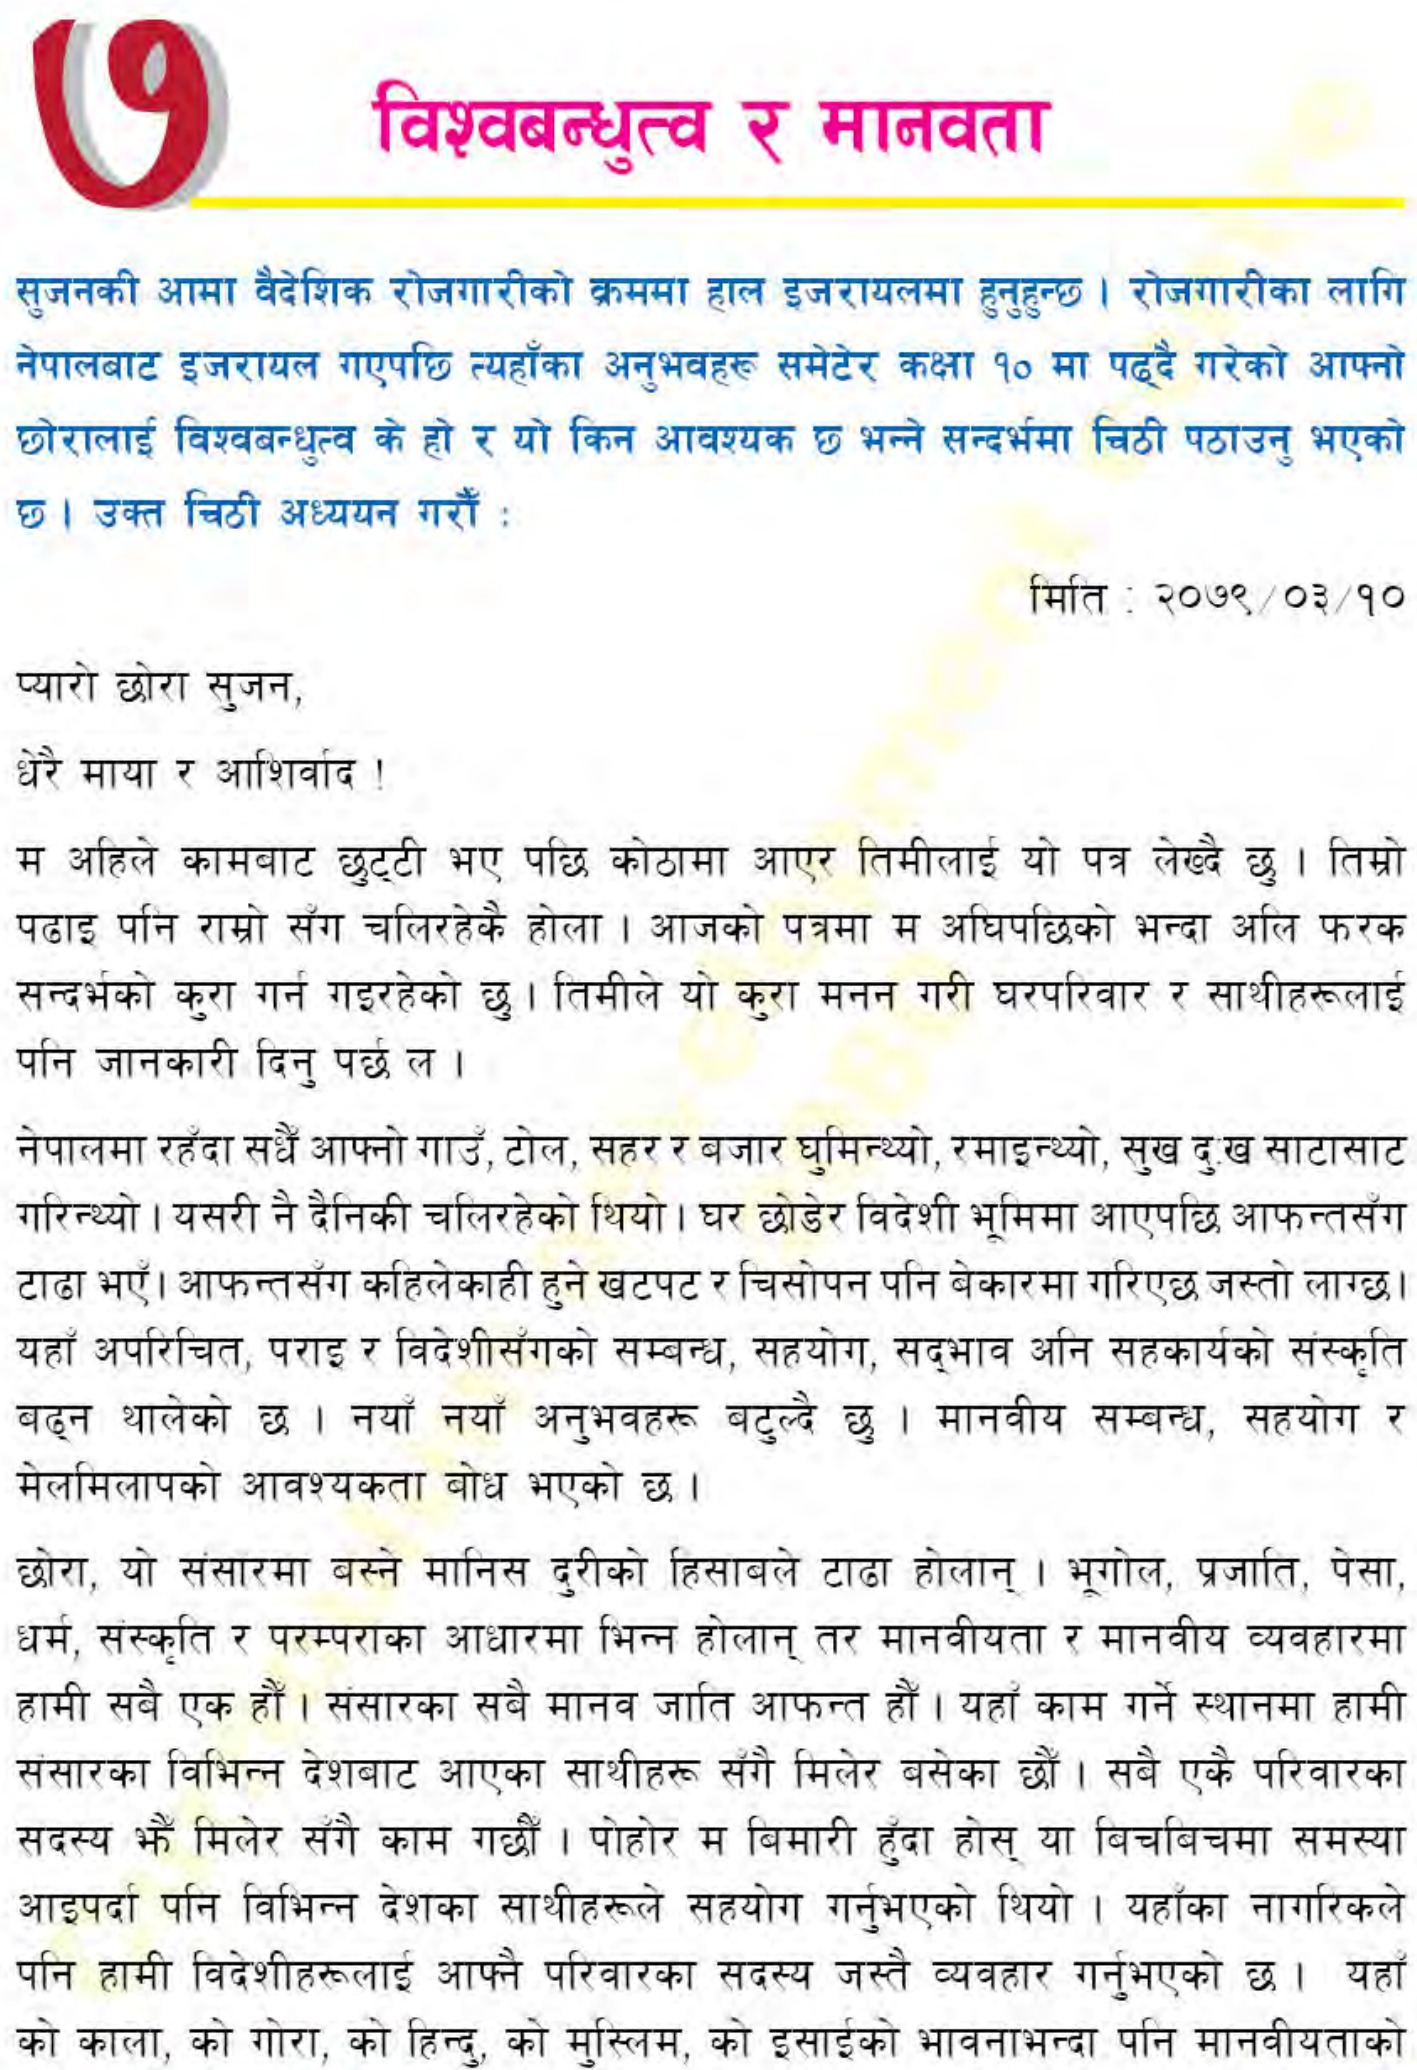 विश्वबन्धुत्व र मानवता (BishwaBandhutwa ra Manavta) - Class 10 Social Unit 3 Lesson 7